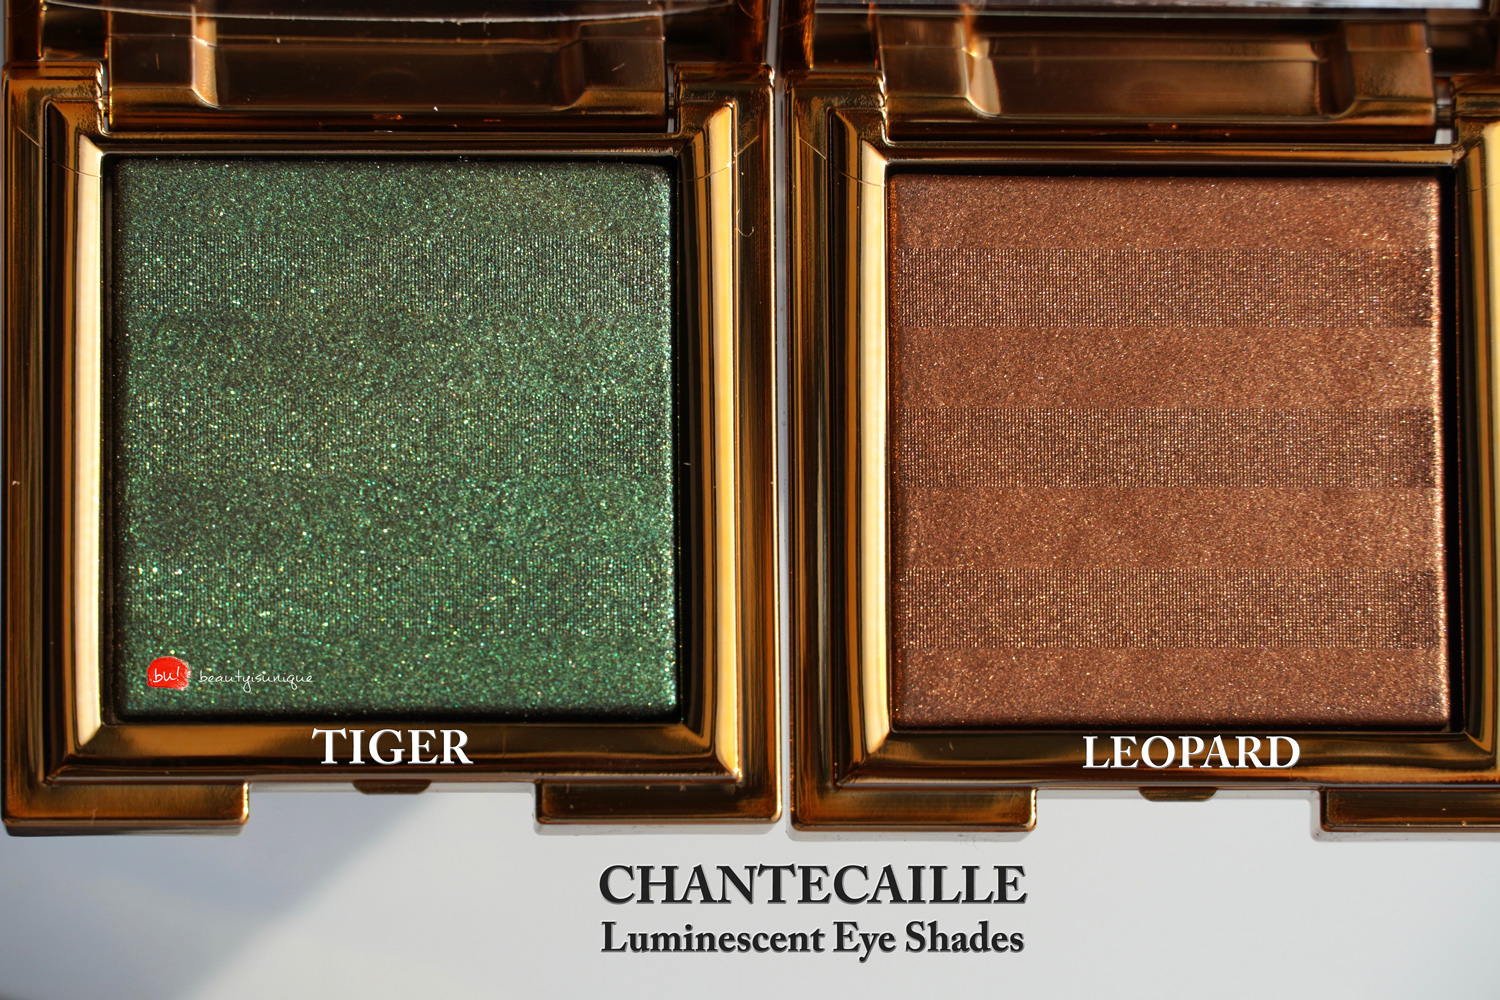 chantecaille-luminescent-eye-shade-tiger-regal-emerald